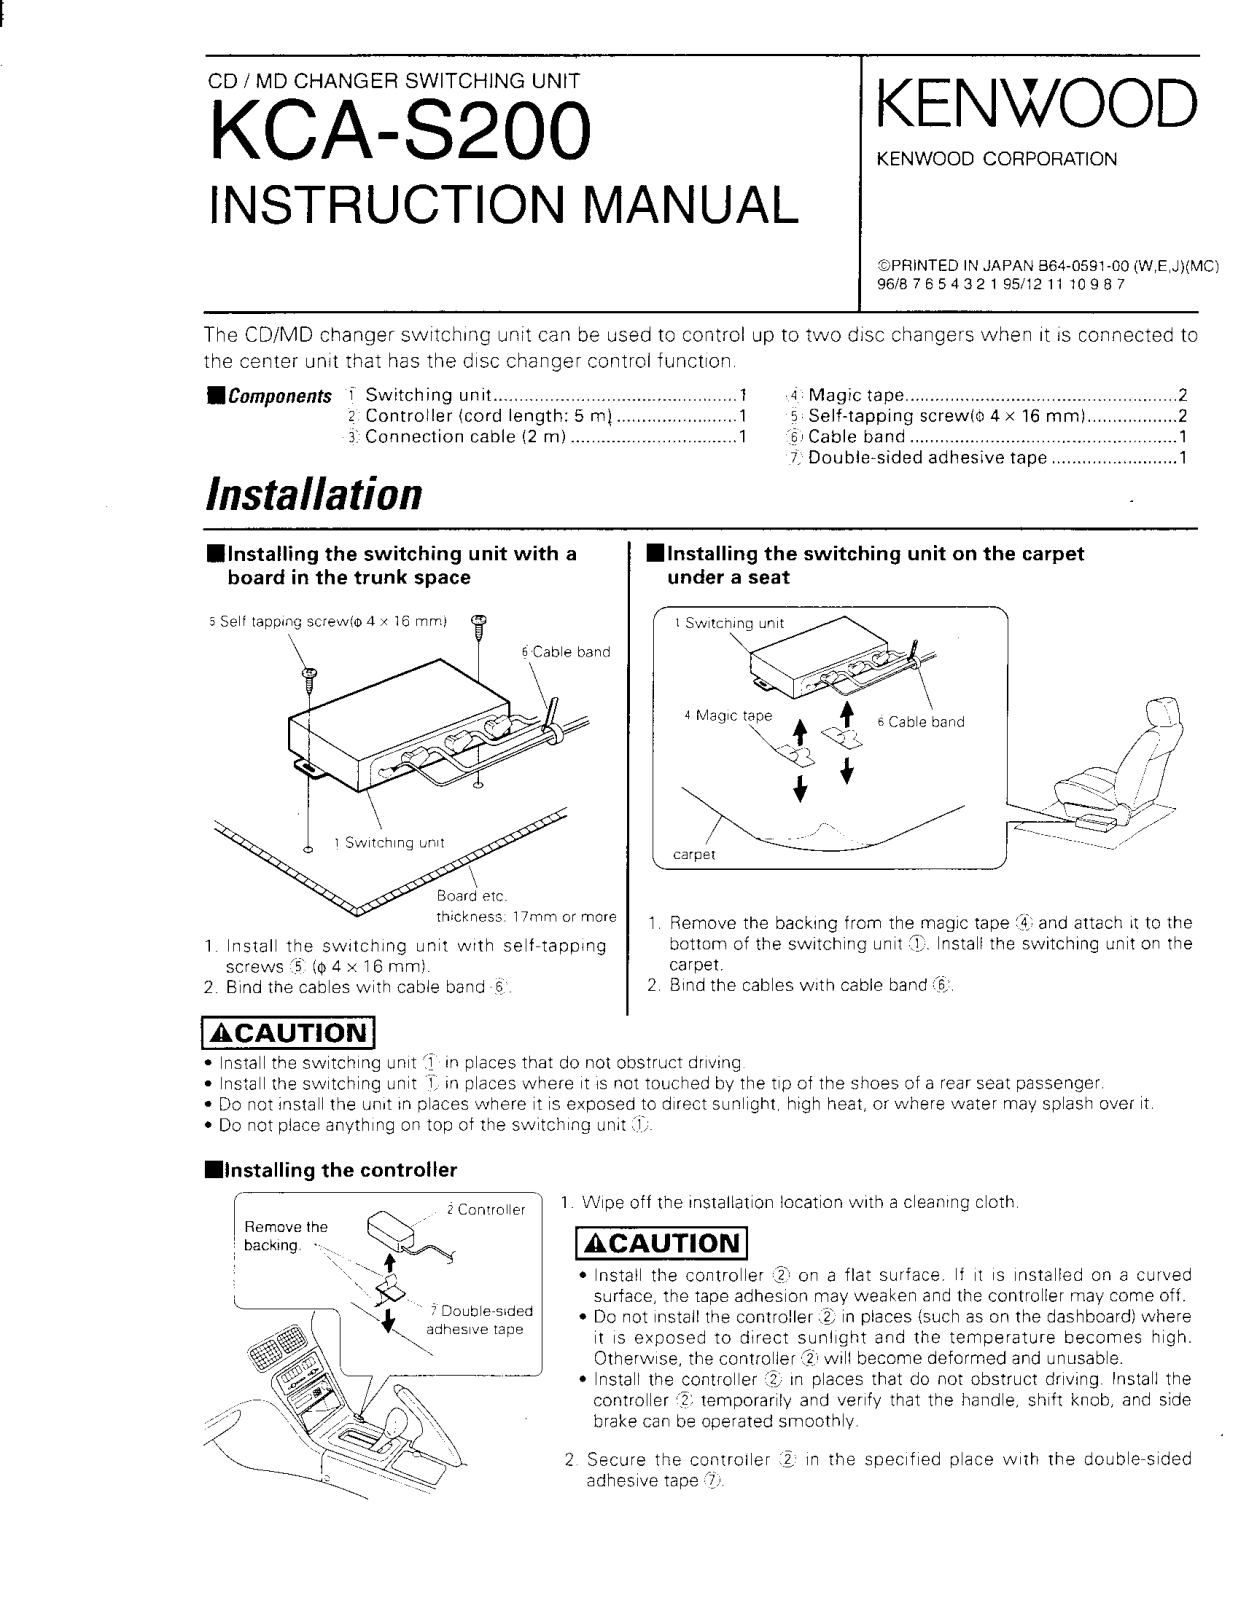 Kenwood KCA-S200 Owner's Manual